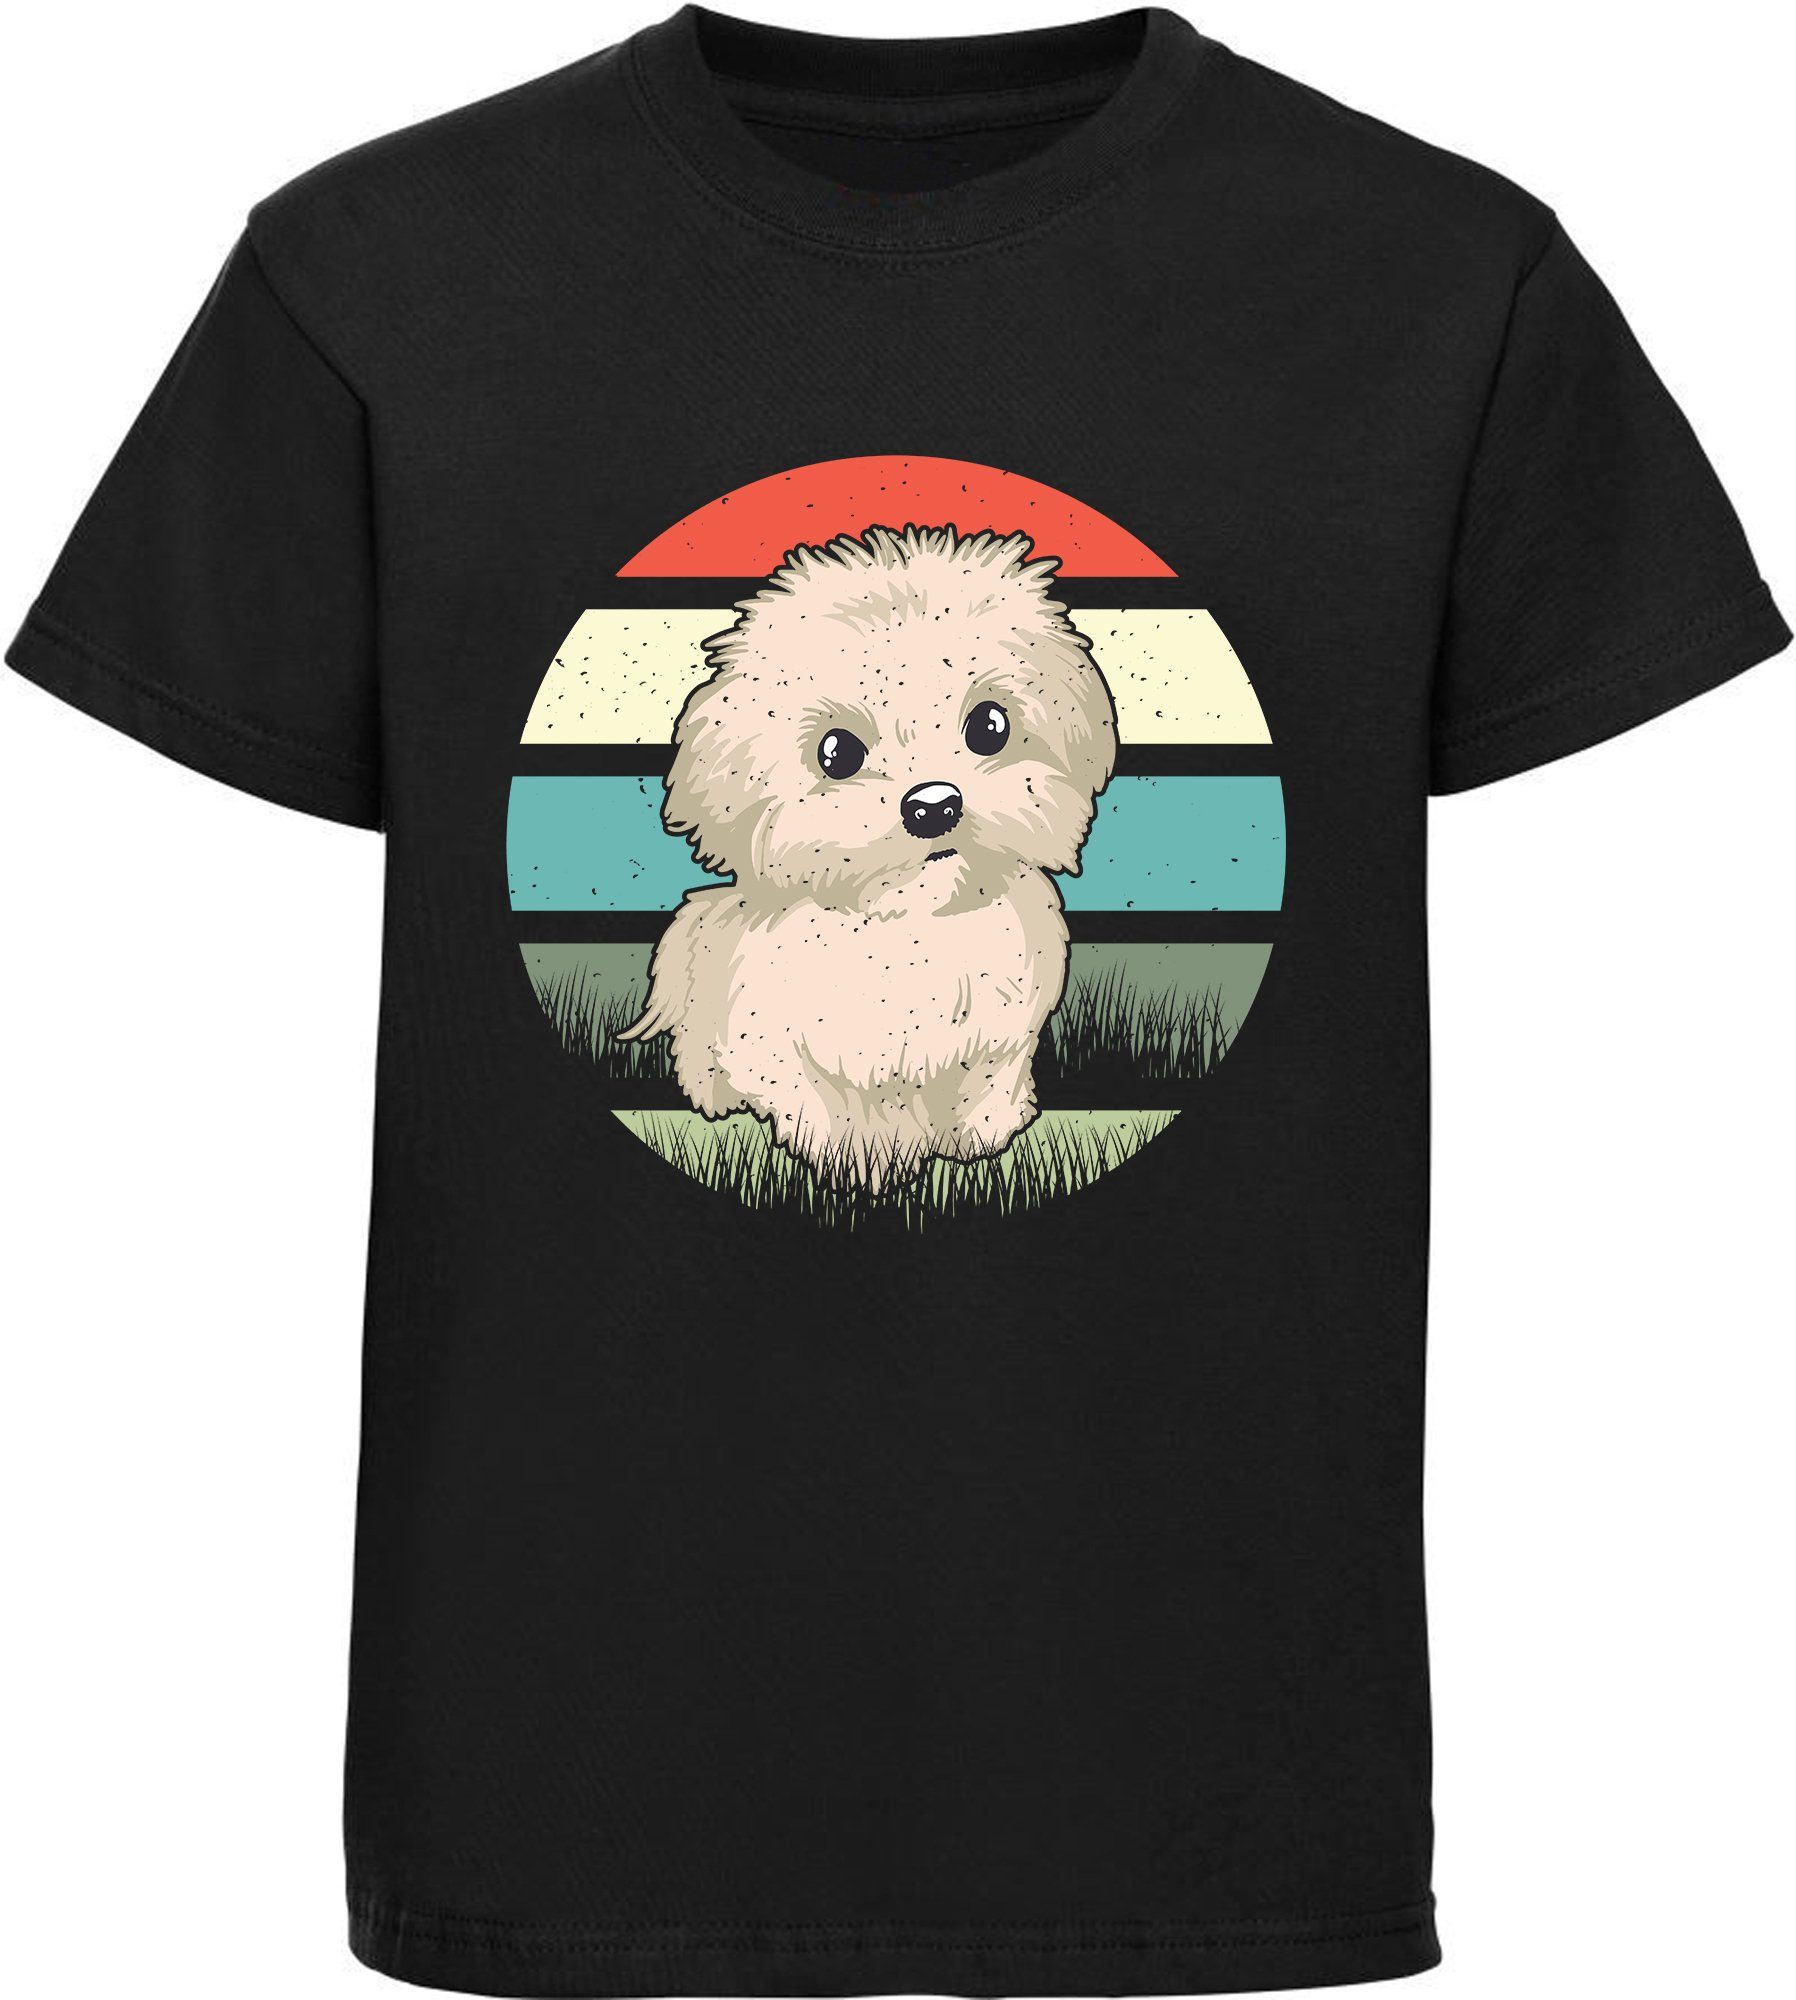 Baumwollshirt Malteser T-Shirt Hunde bedruckt schwarz Welpen Retro Kinder - i242 MyDesign24 mit Print-Shirt Aufdruck,